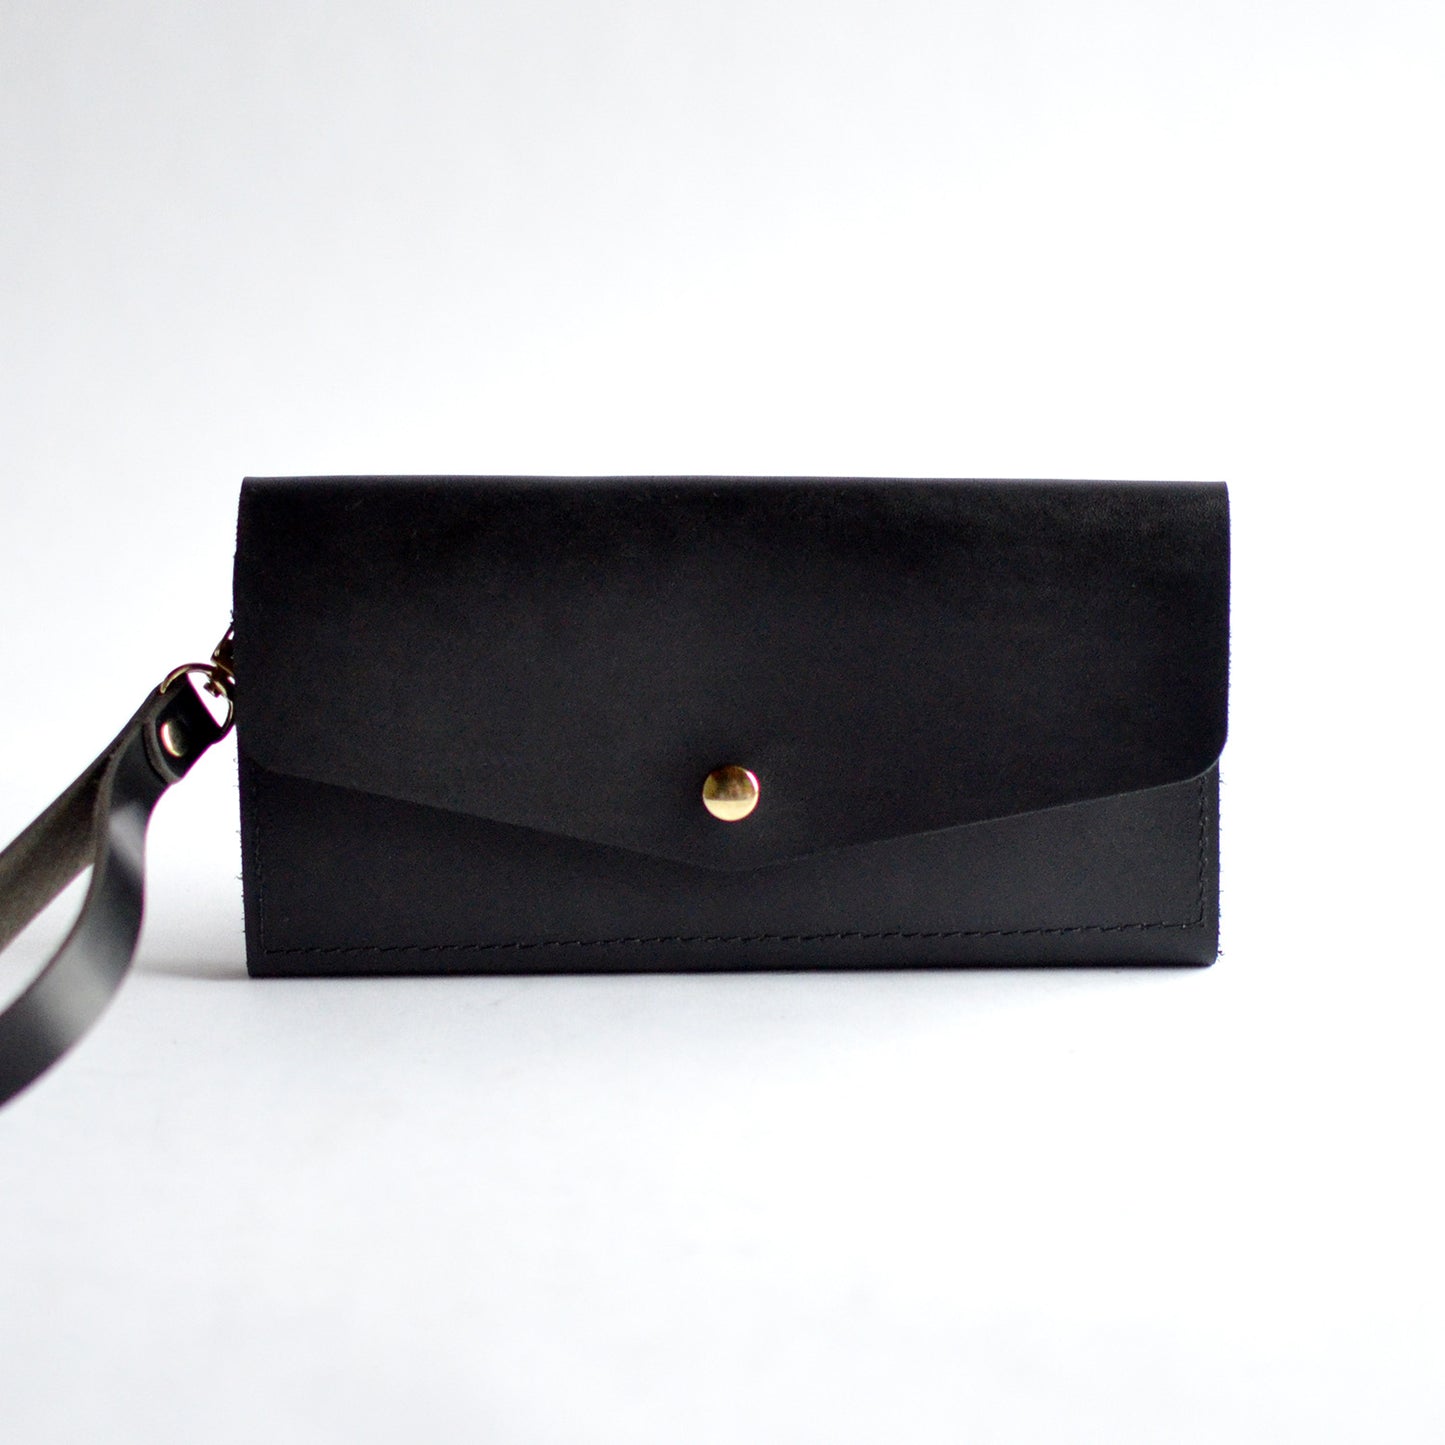 Wristlet Wallet Clutch - Black Leather